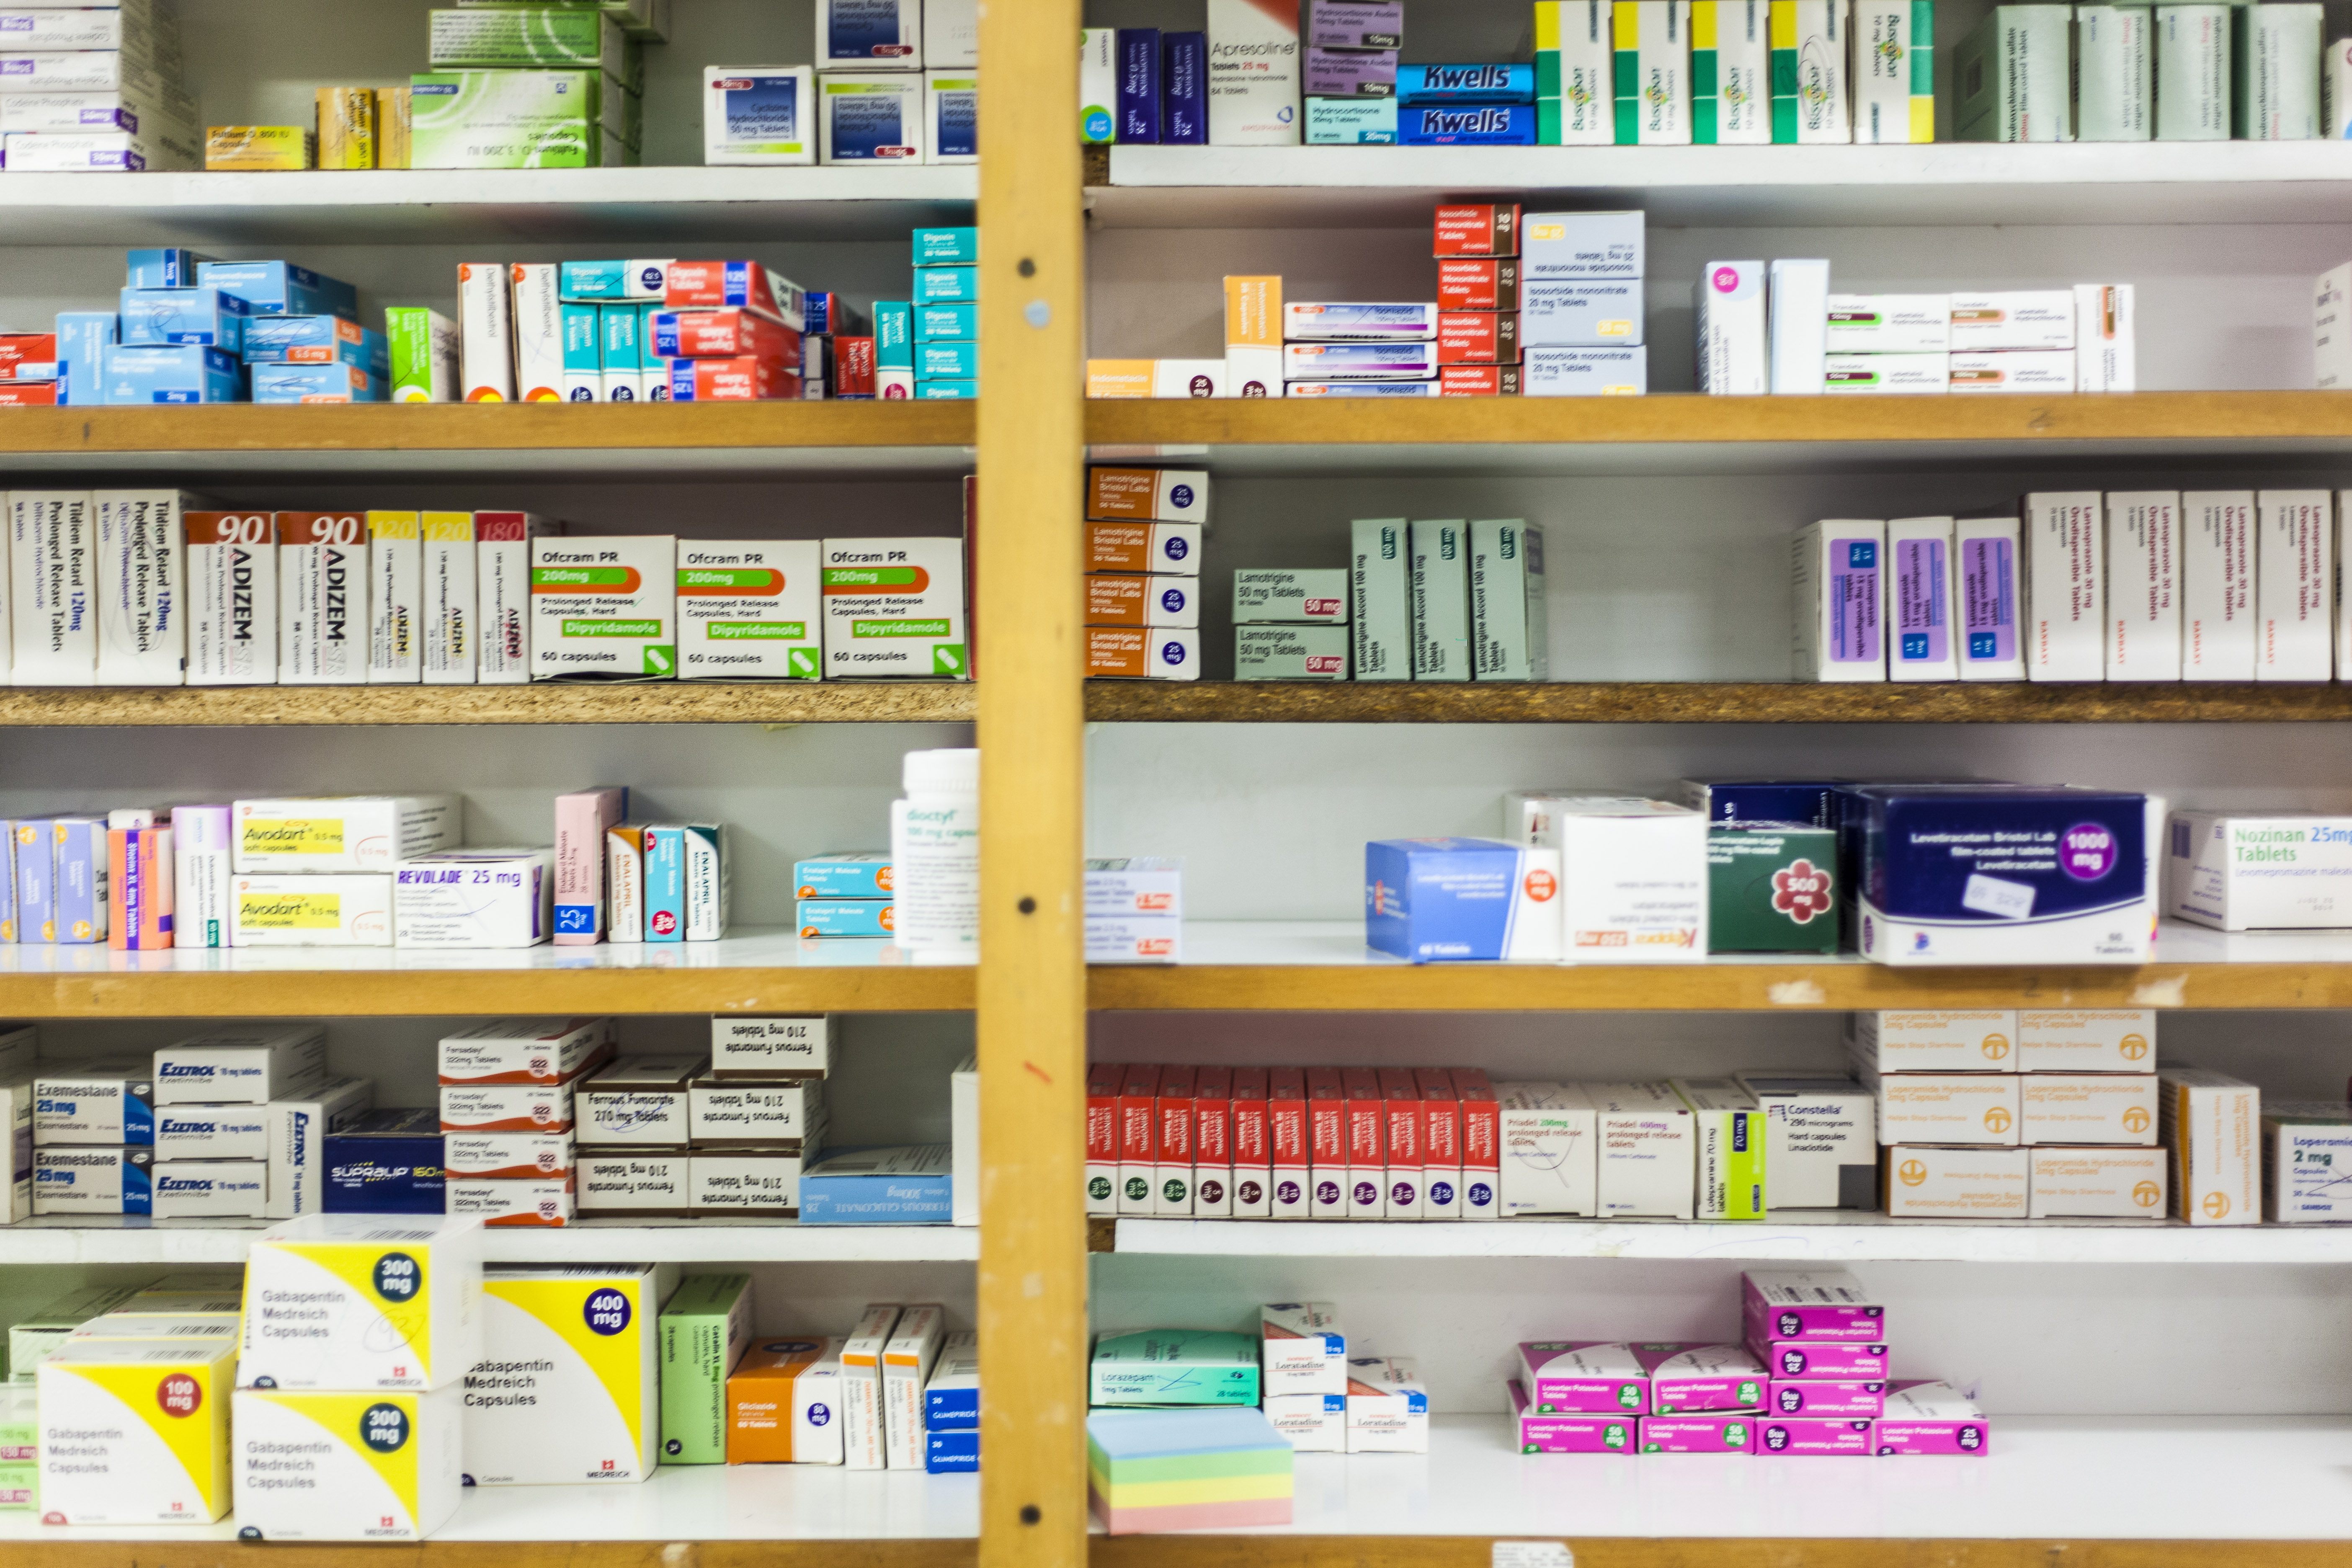 Stacks of medication boxes on shelves